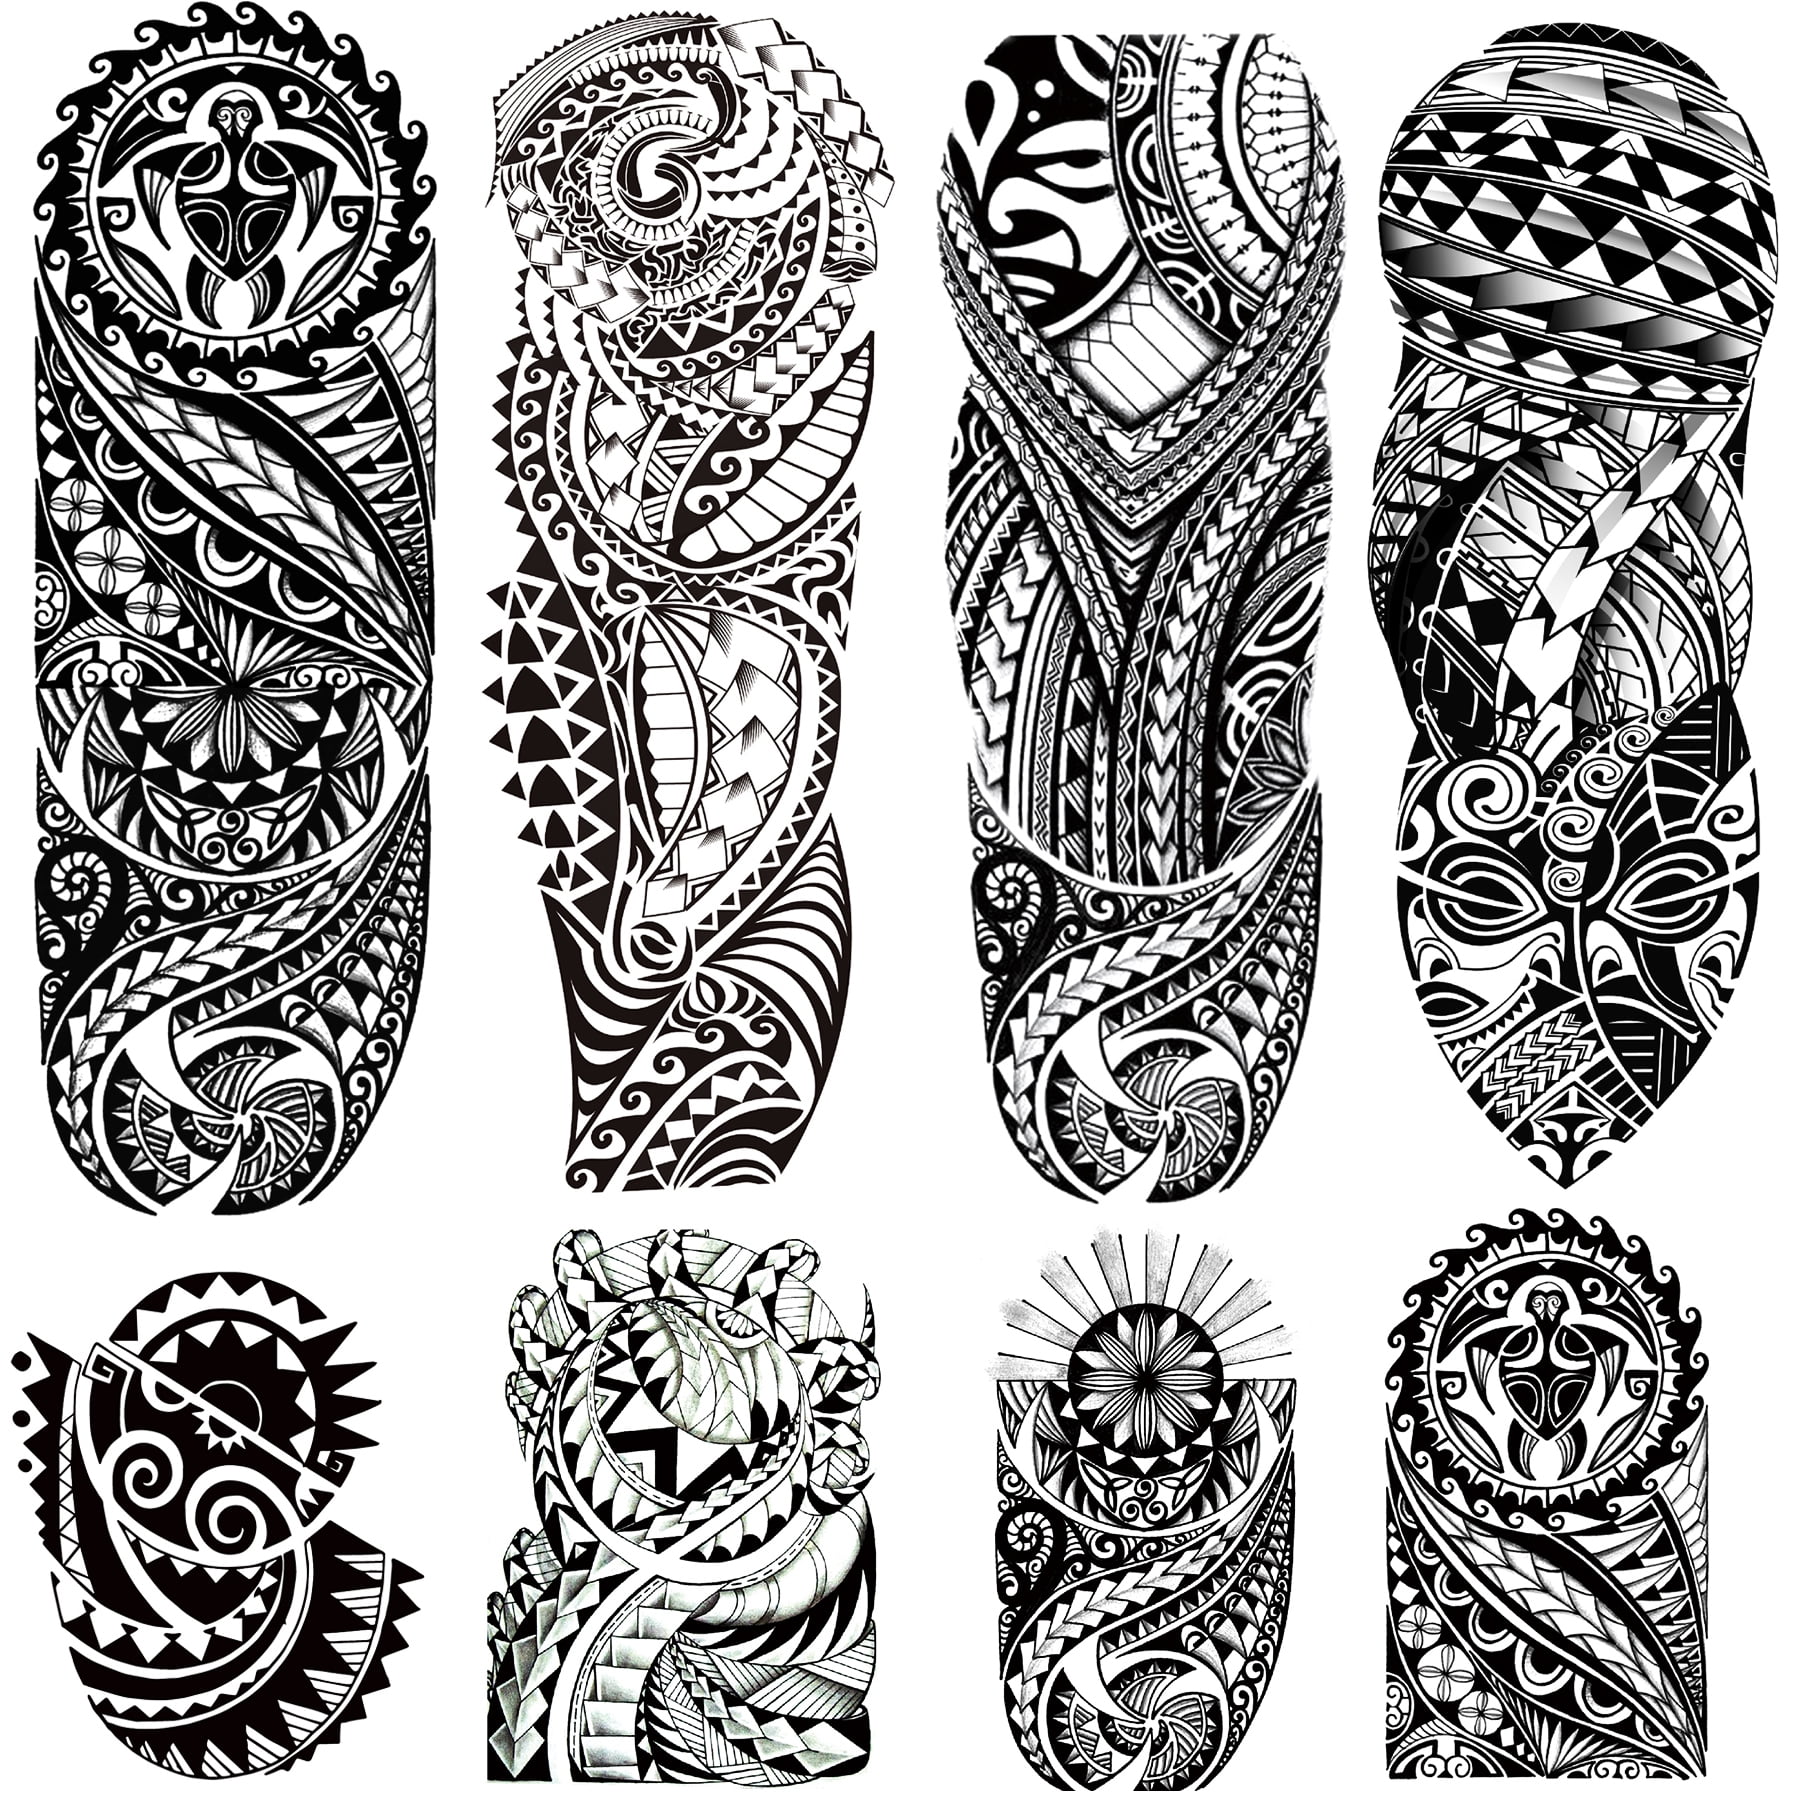 S.A.V.I Temporary Tattoo For Girls Men Women Tribal Totems Black Dragon  Fire Sticker Size 19x12CM - 1PC. (8010) : Amazon.in: Beauty